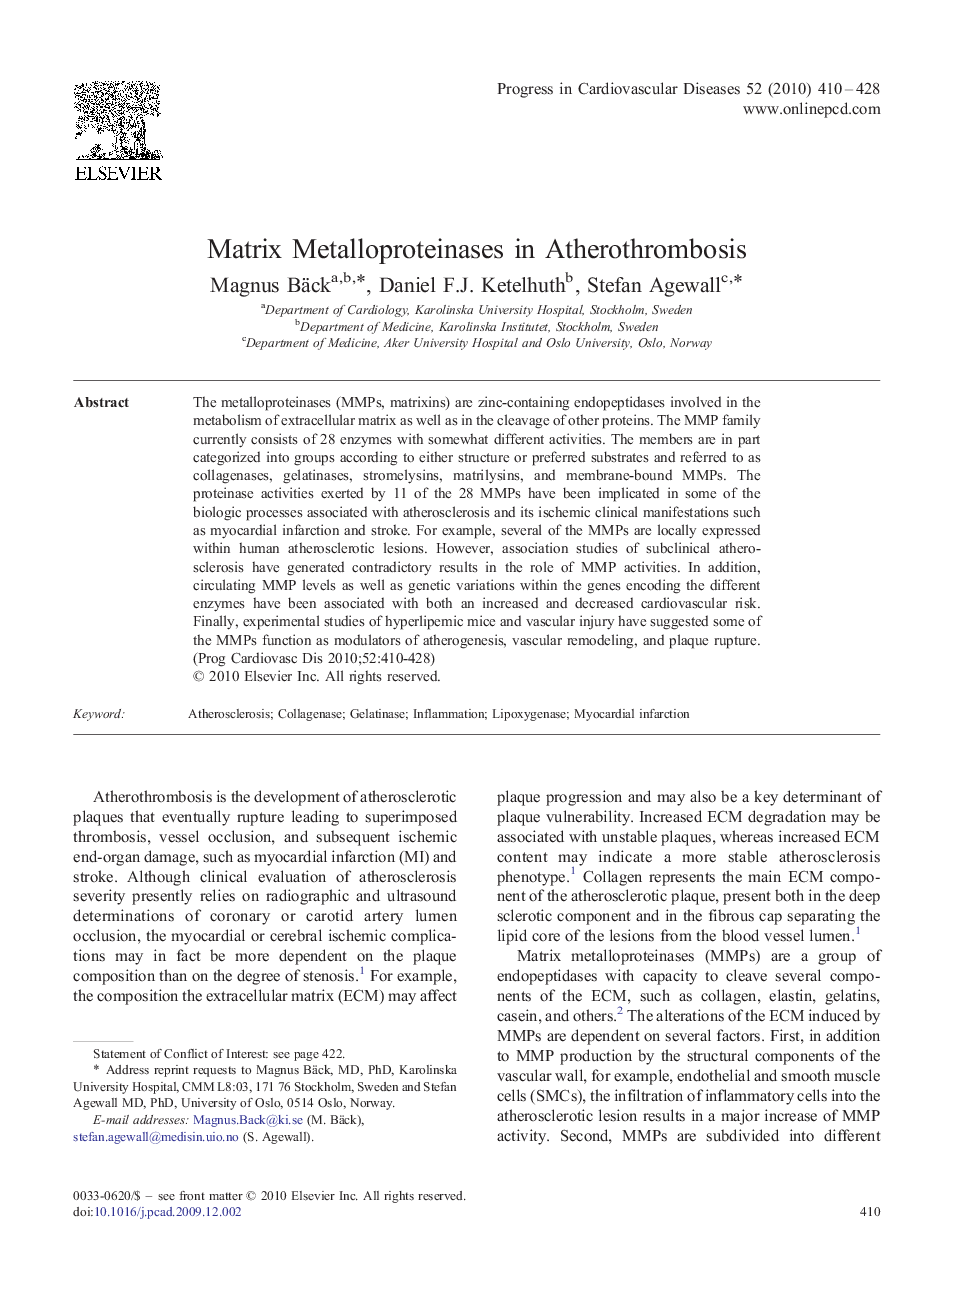 Matrix Metalloproteinases in Atherothrombosis 